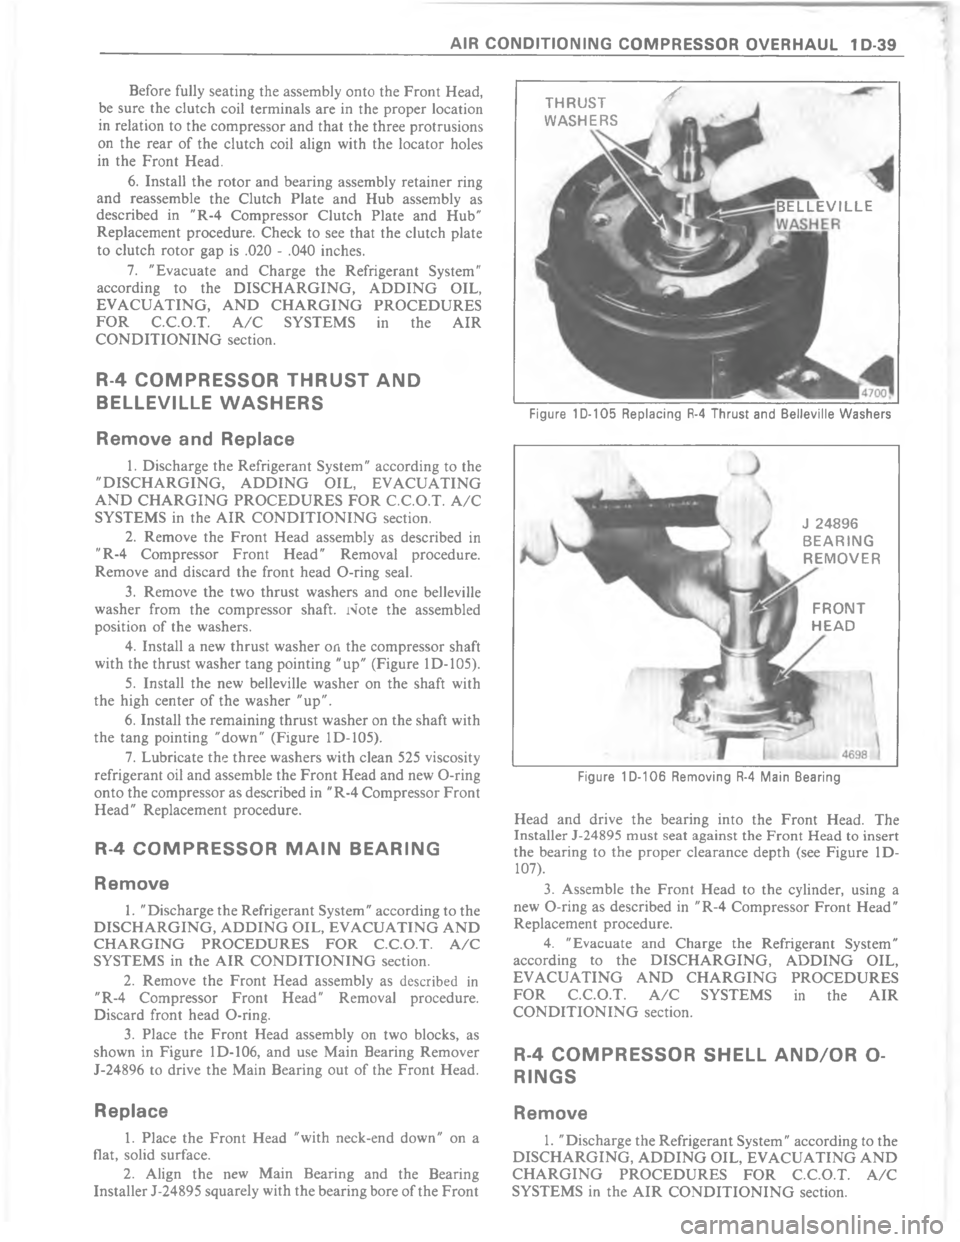 CHEVROLET LIGHT DUTY TRUCK 1980  Repair Everhaul Manual Downloaded from www.Manualslib.com manuals search engine  	      9        	                (    0 

	

